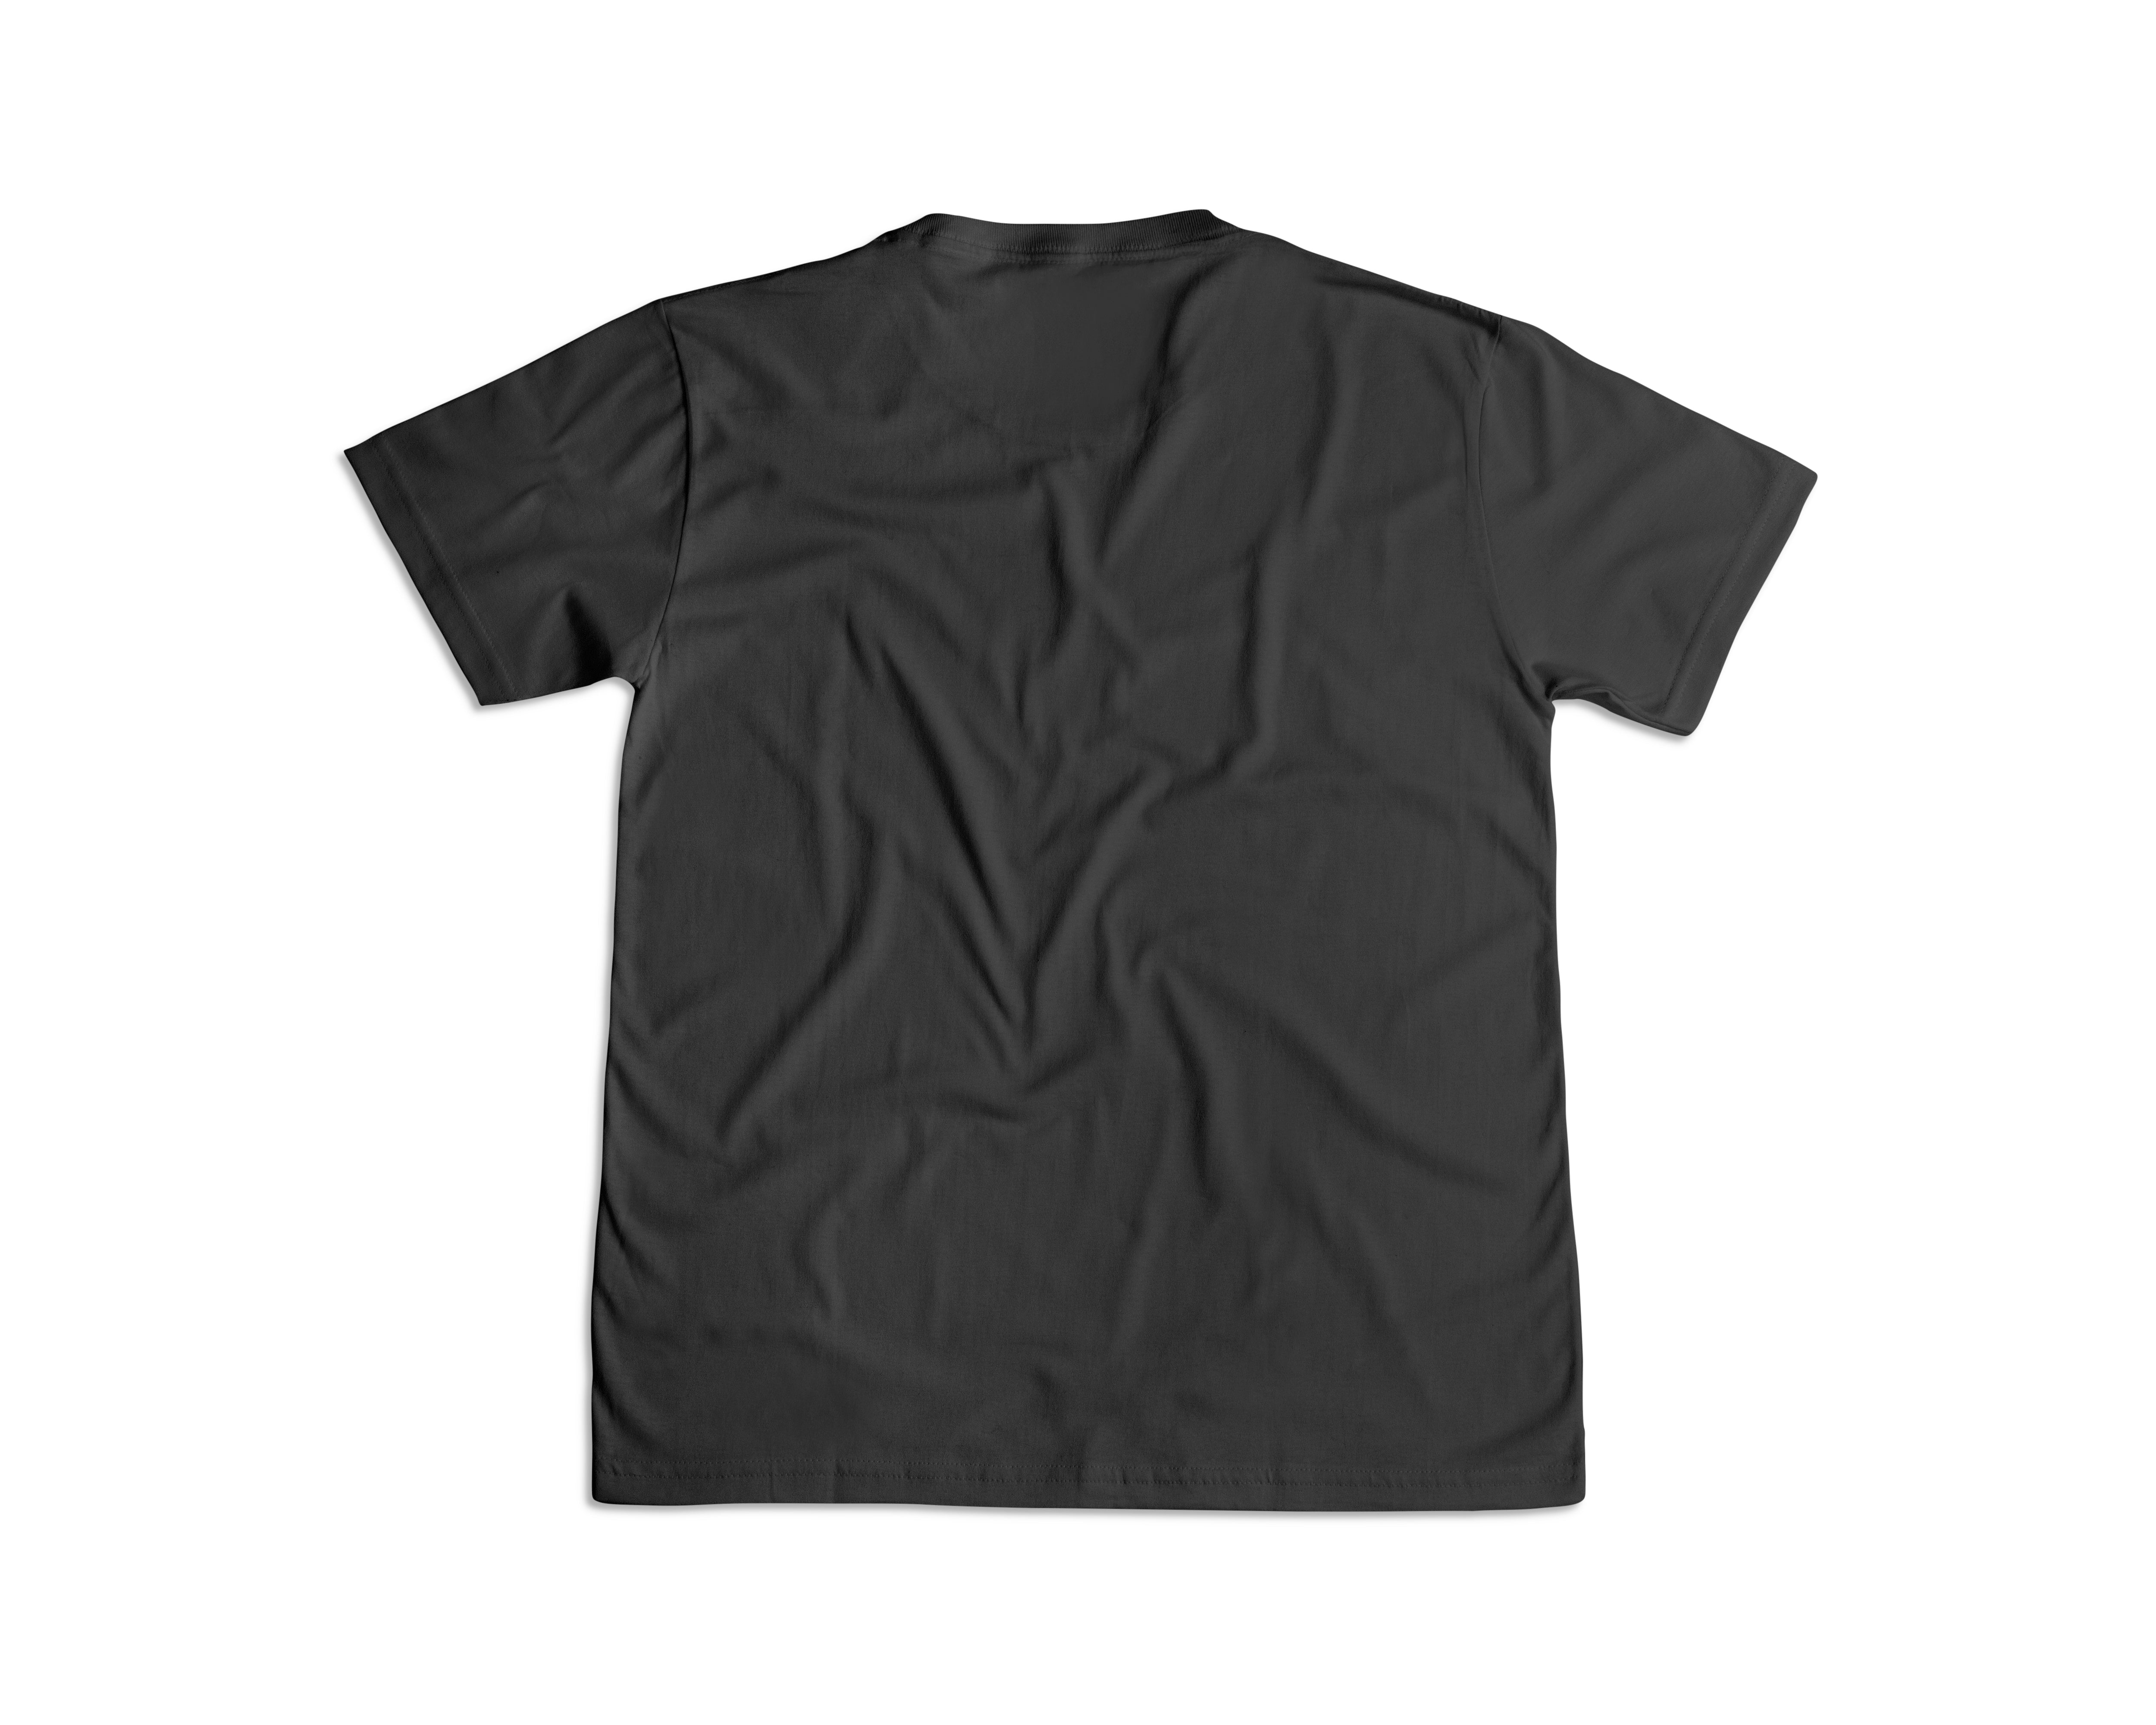 Unisex Adult Allen Iverson Tee Shirt